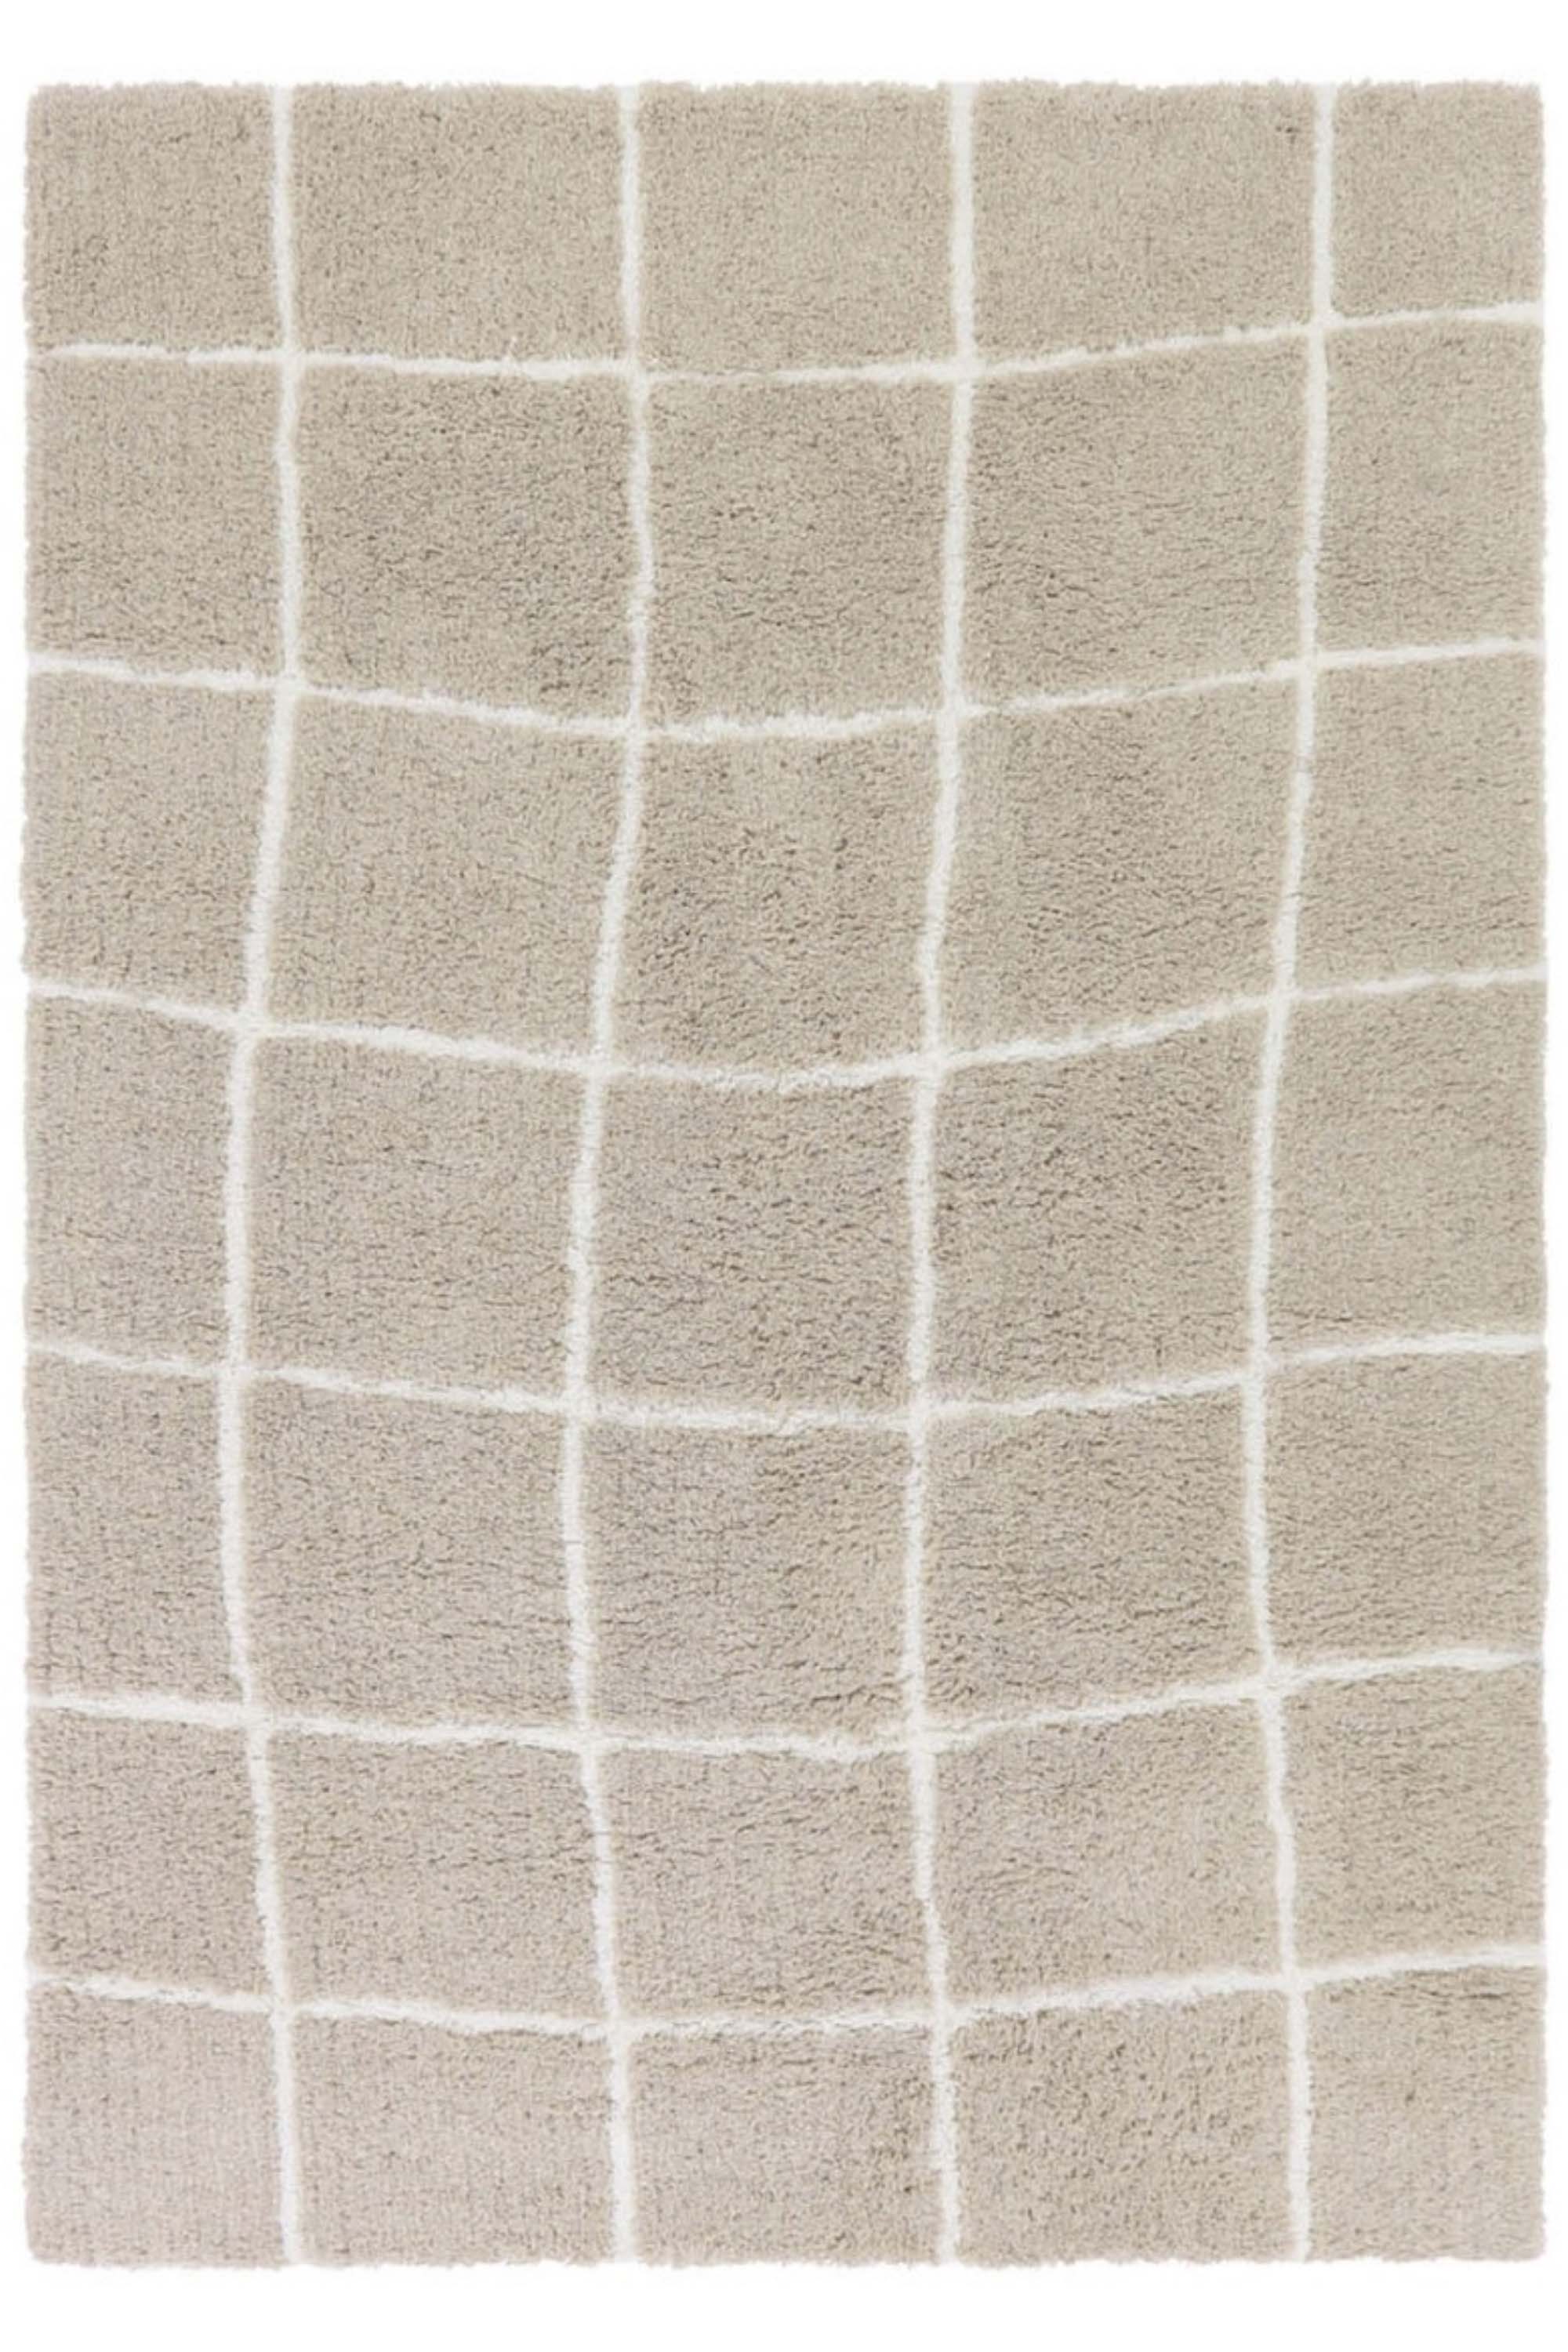 Beige woollen rug with white line feature